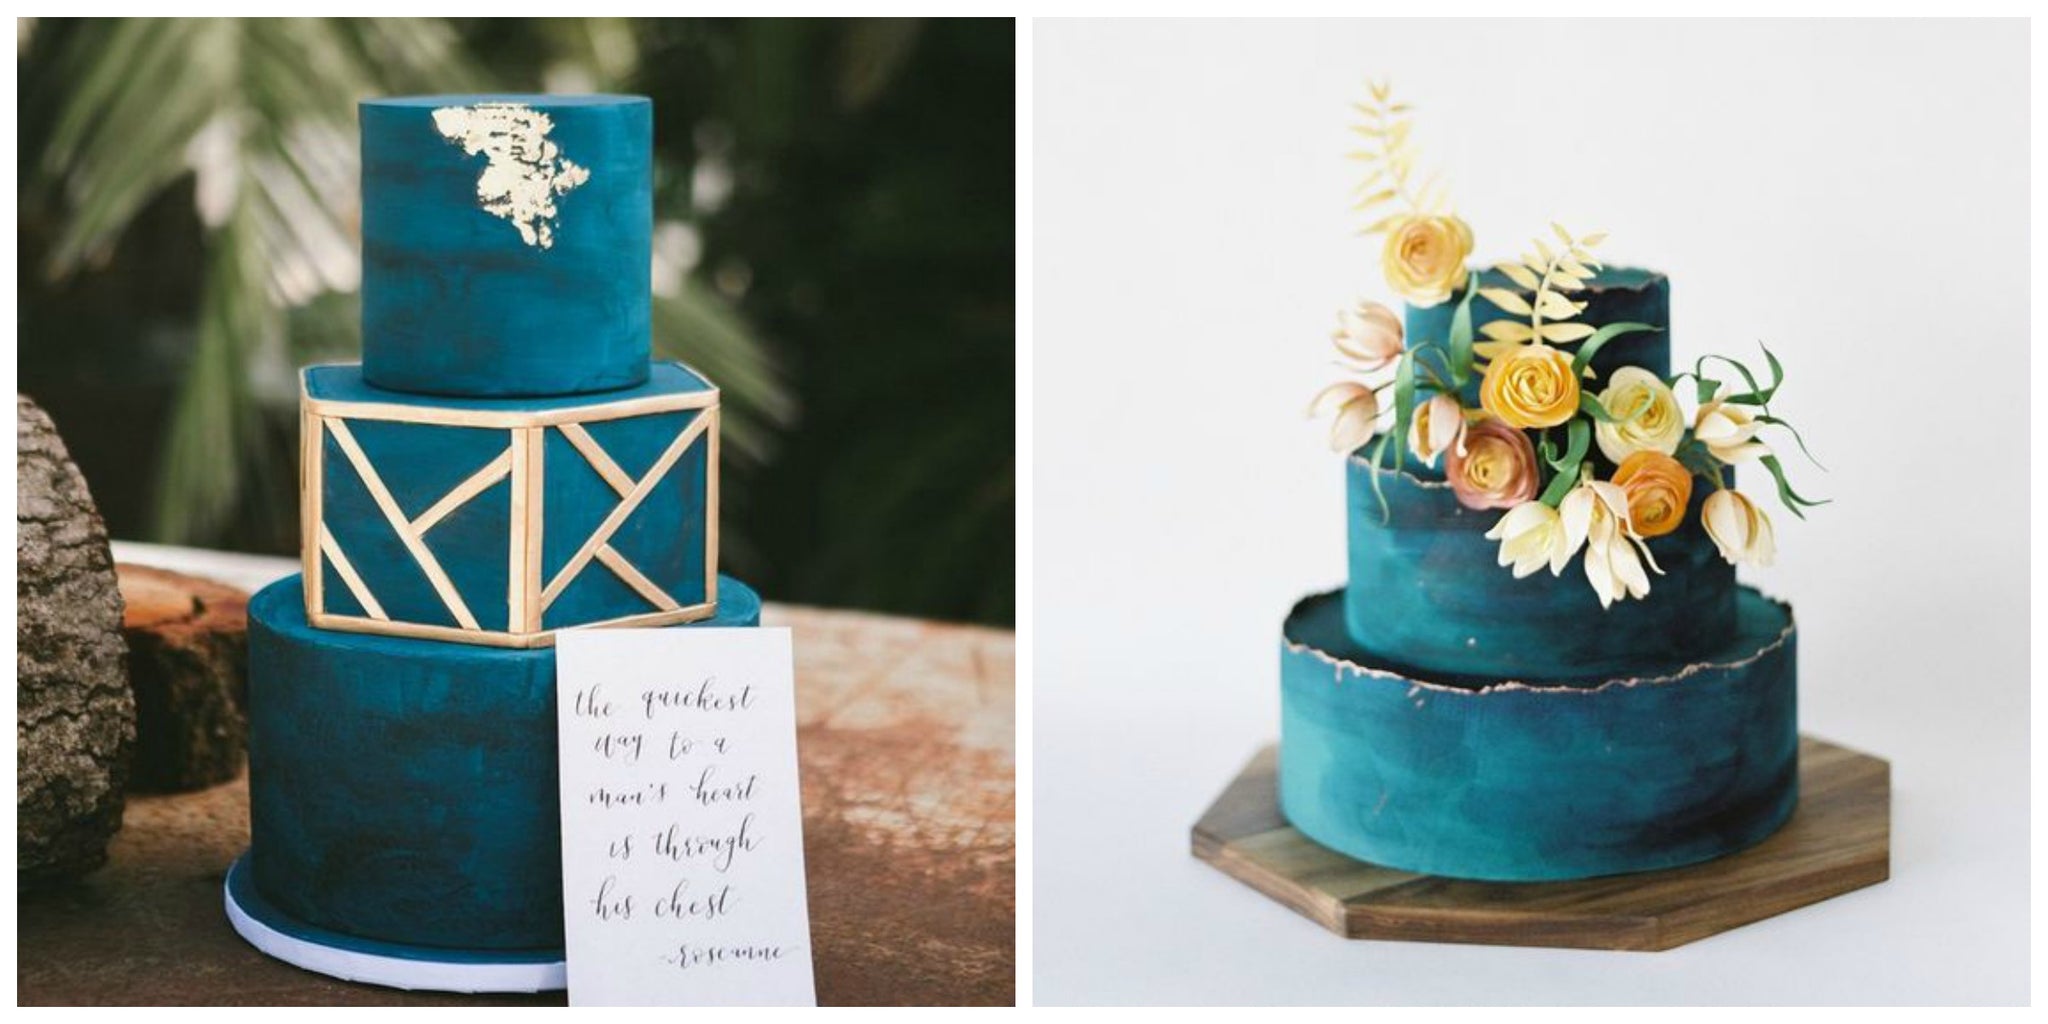 Blue Wedding Cake Trends for 2019